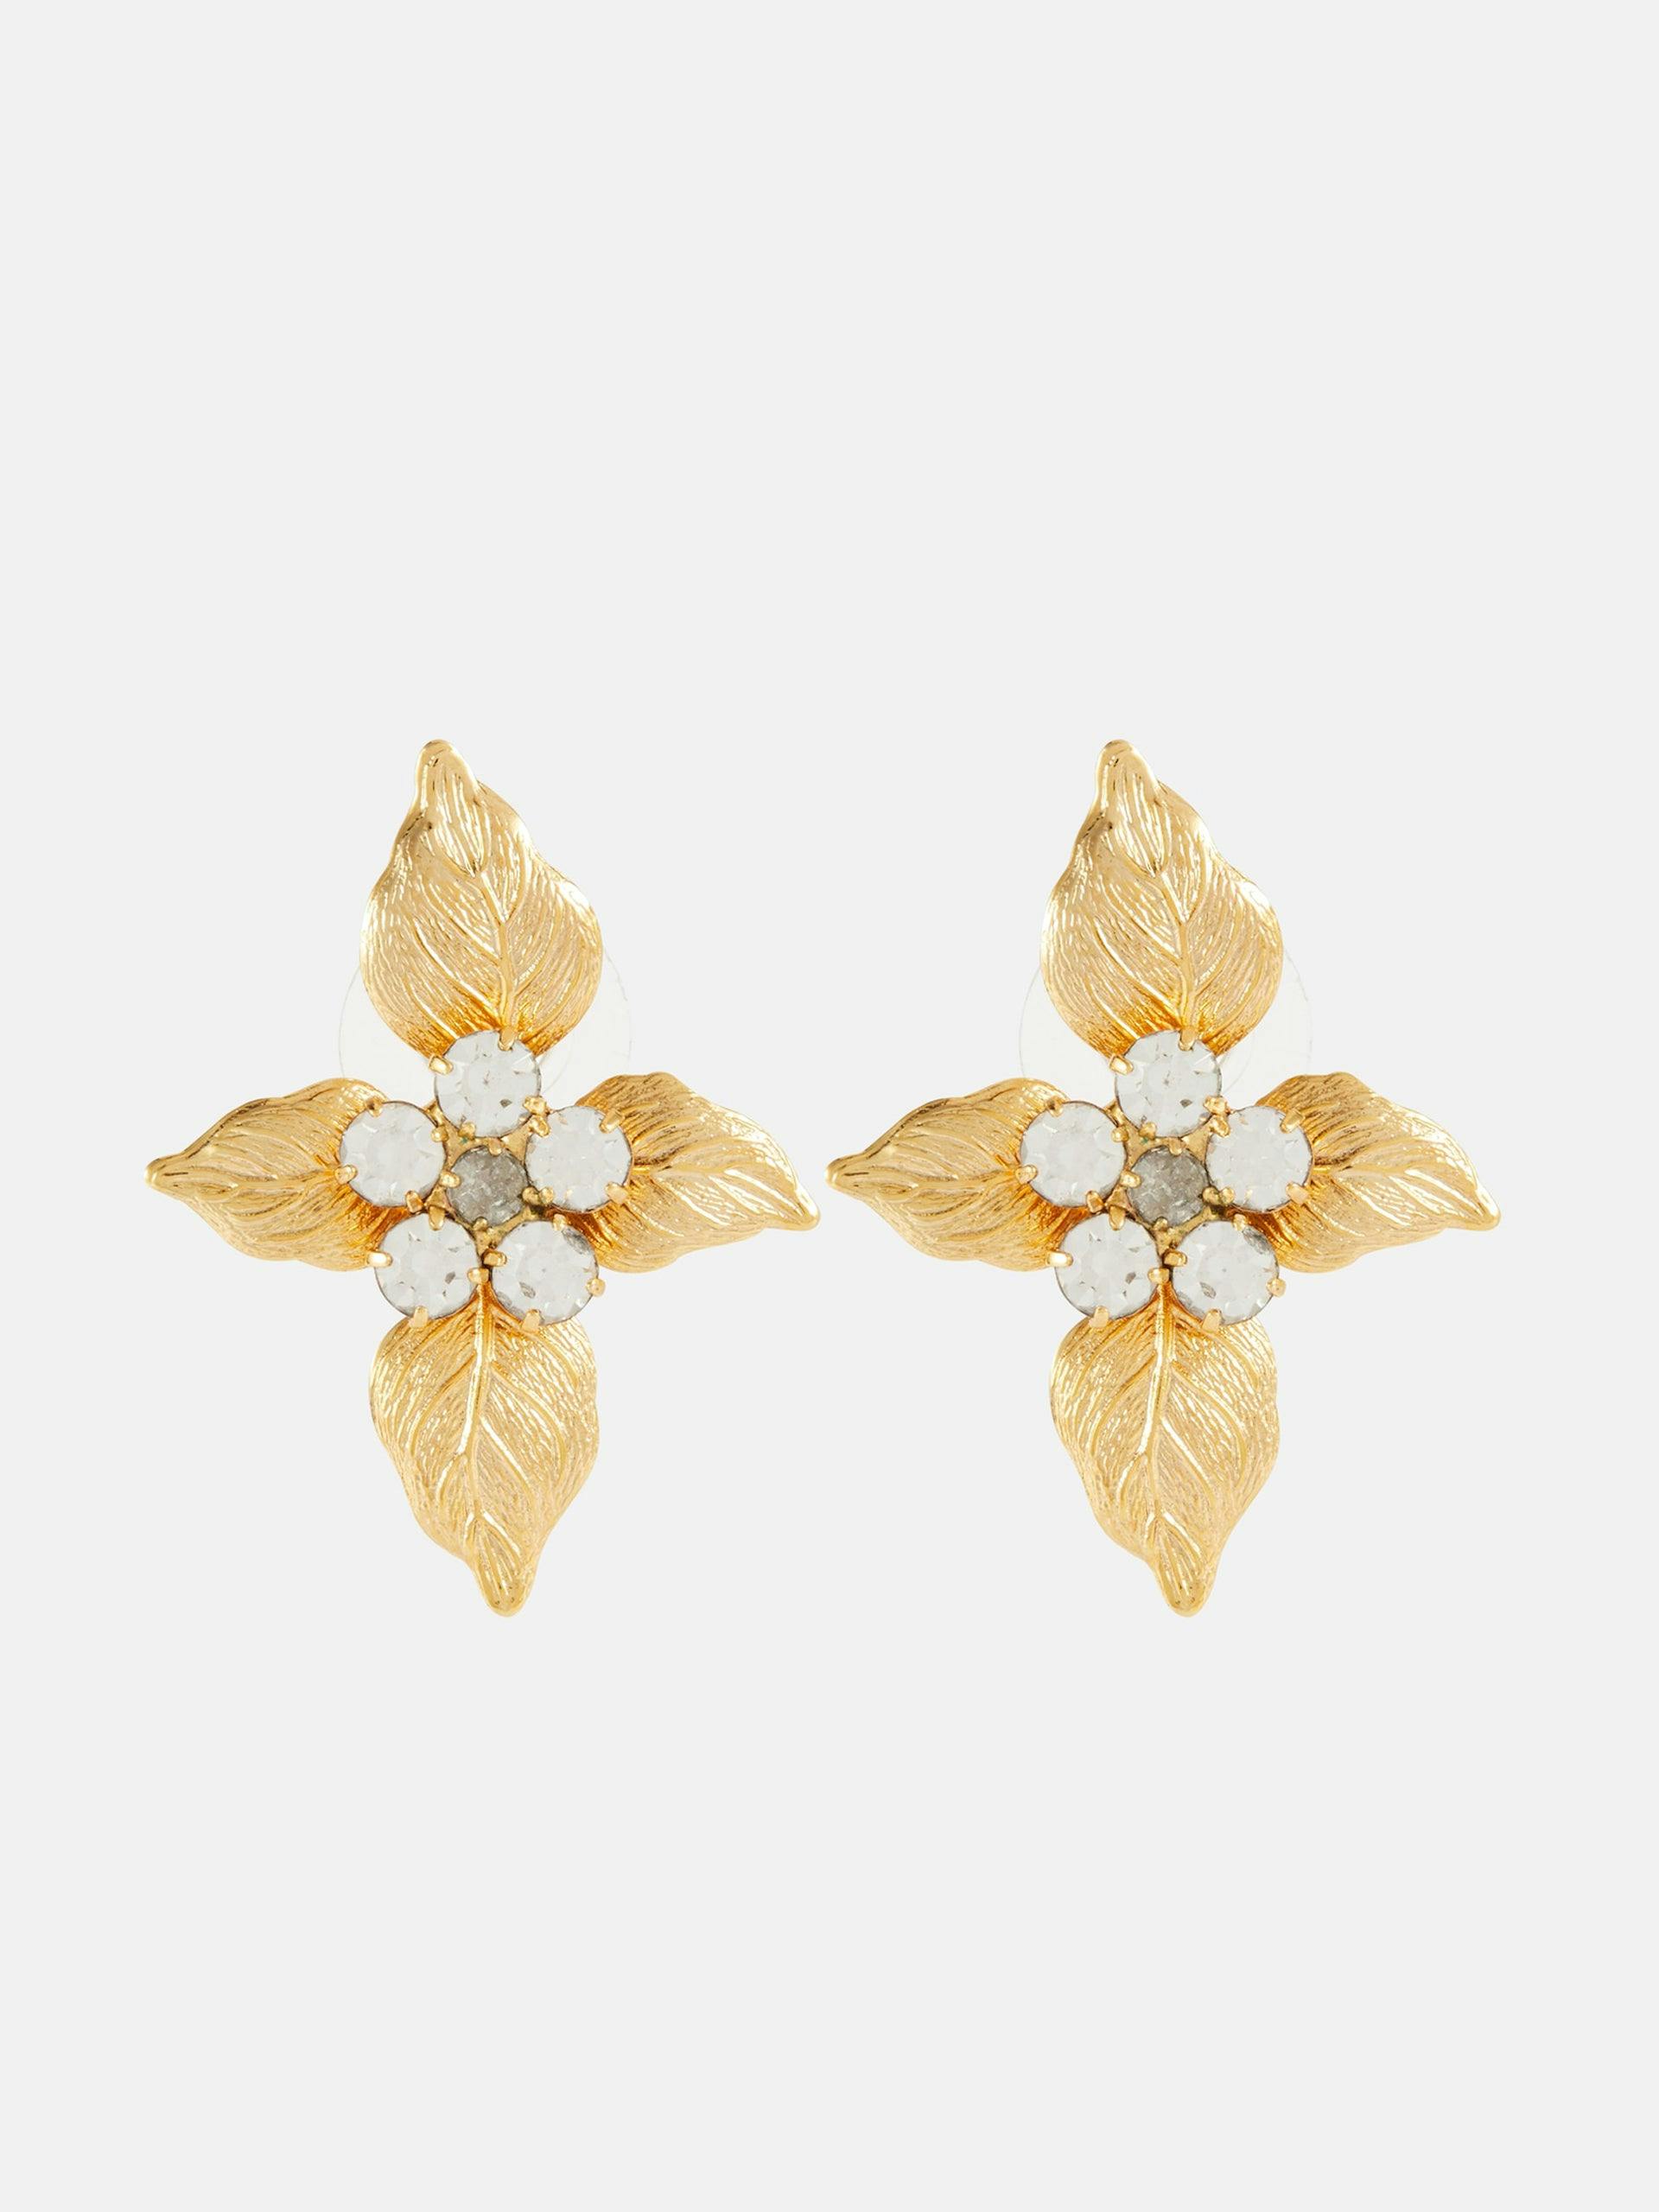 Gold embellished flower earrings